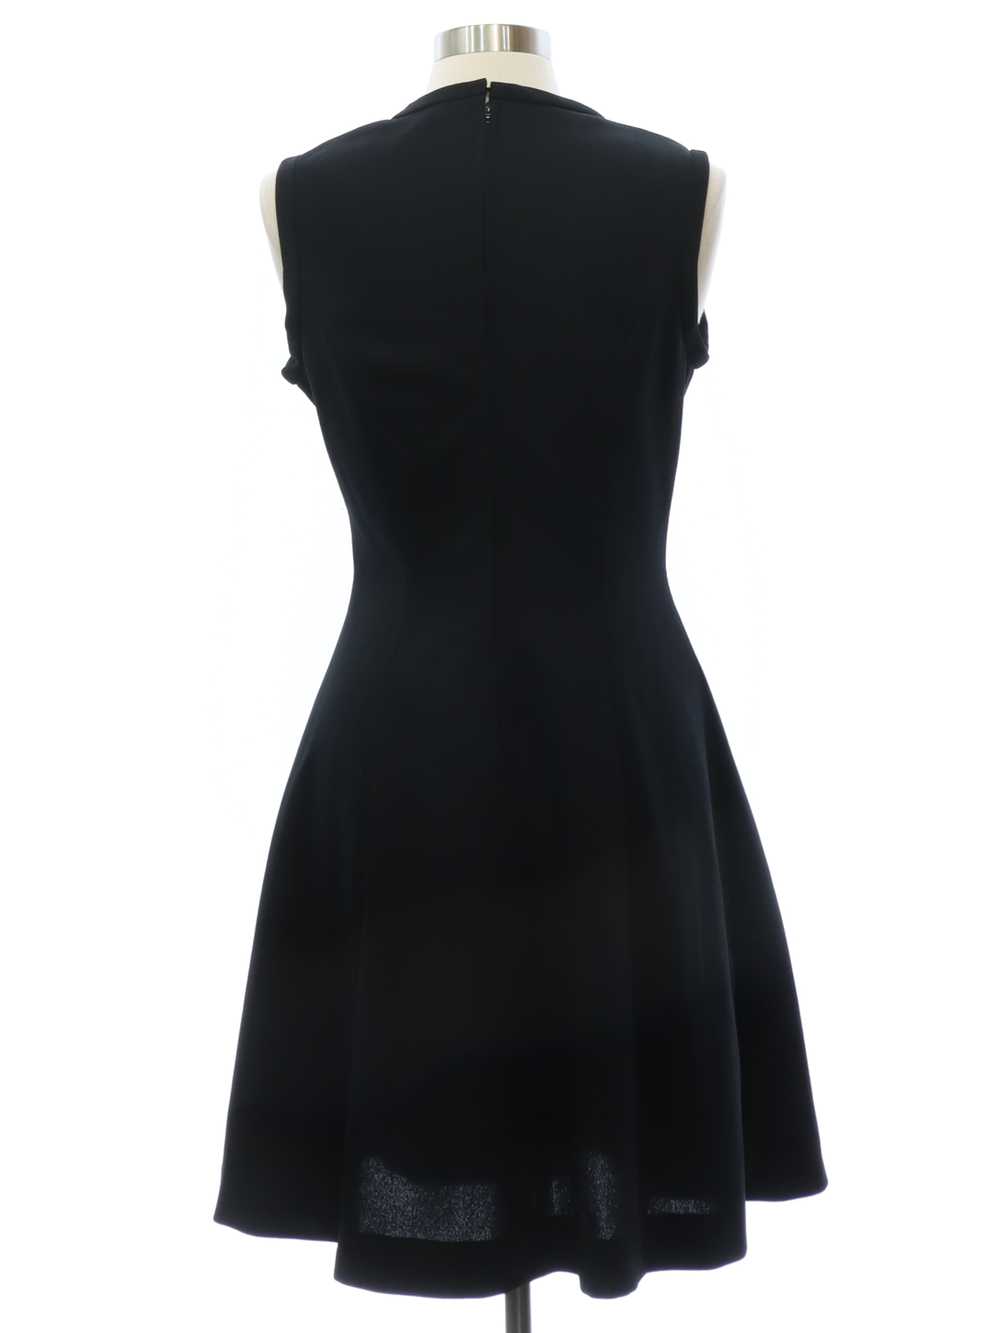 1970's Black Knit Dress - image 3